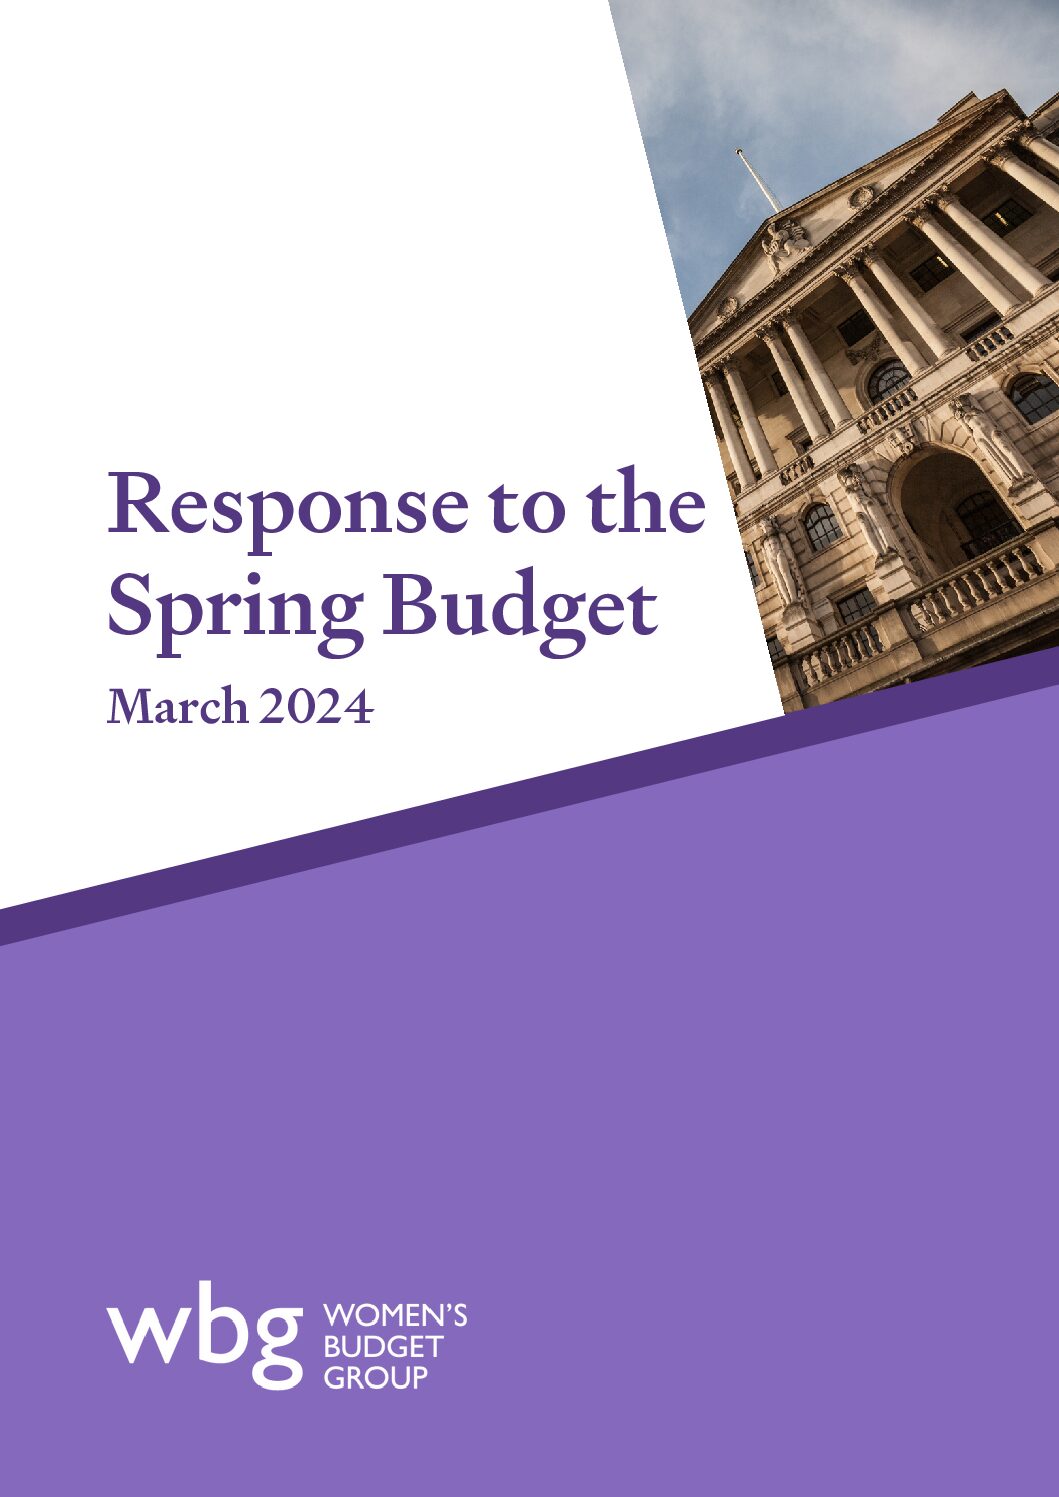 WBG’s full response to the Spring Budget 2024